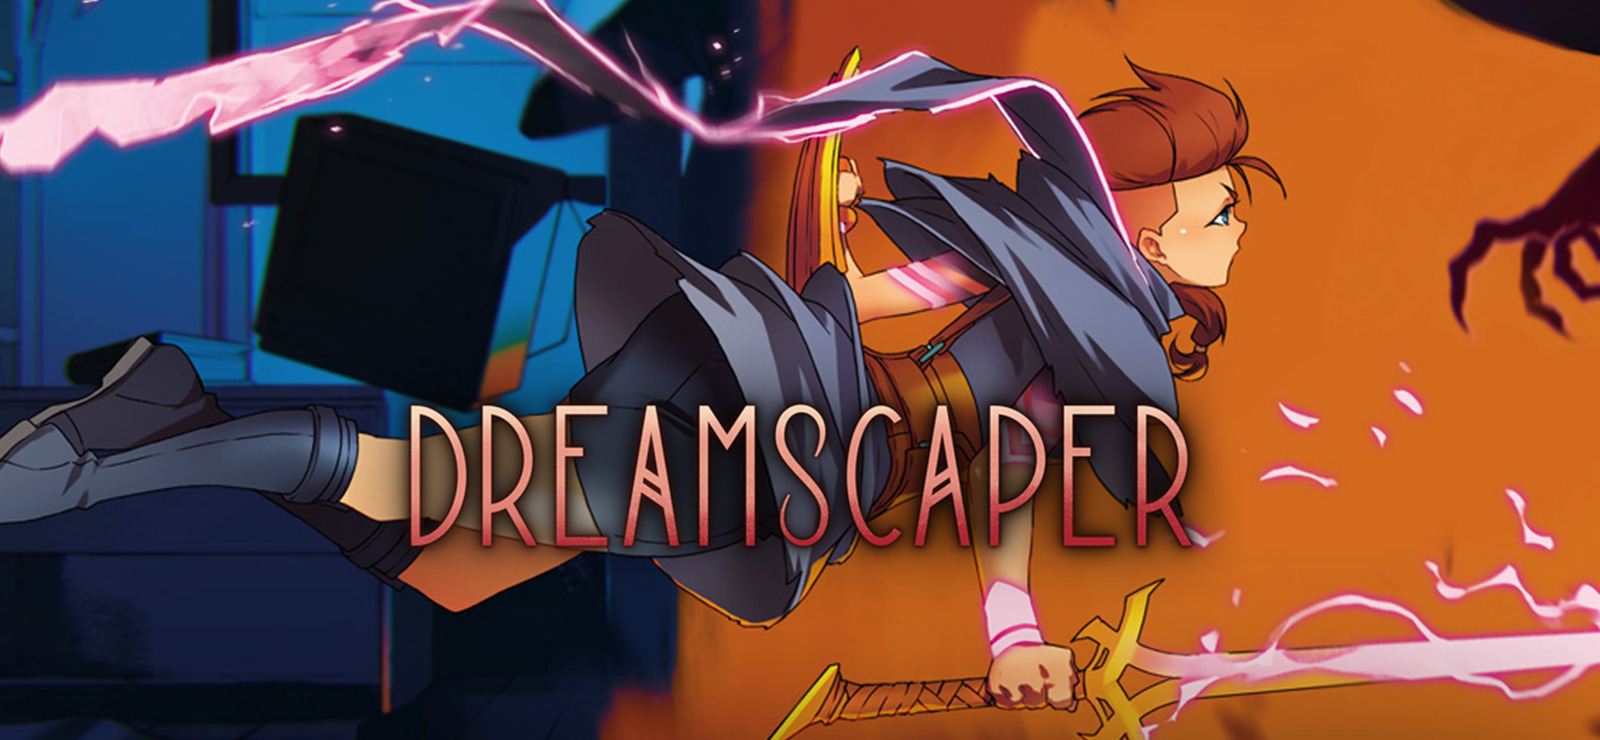 Dreamscaper download the new version for apple